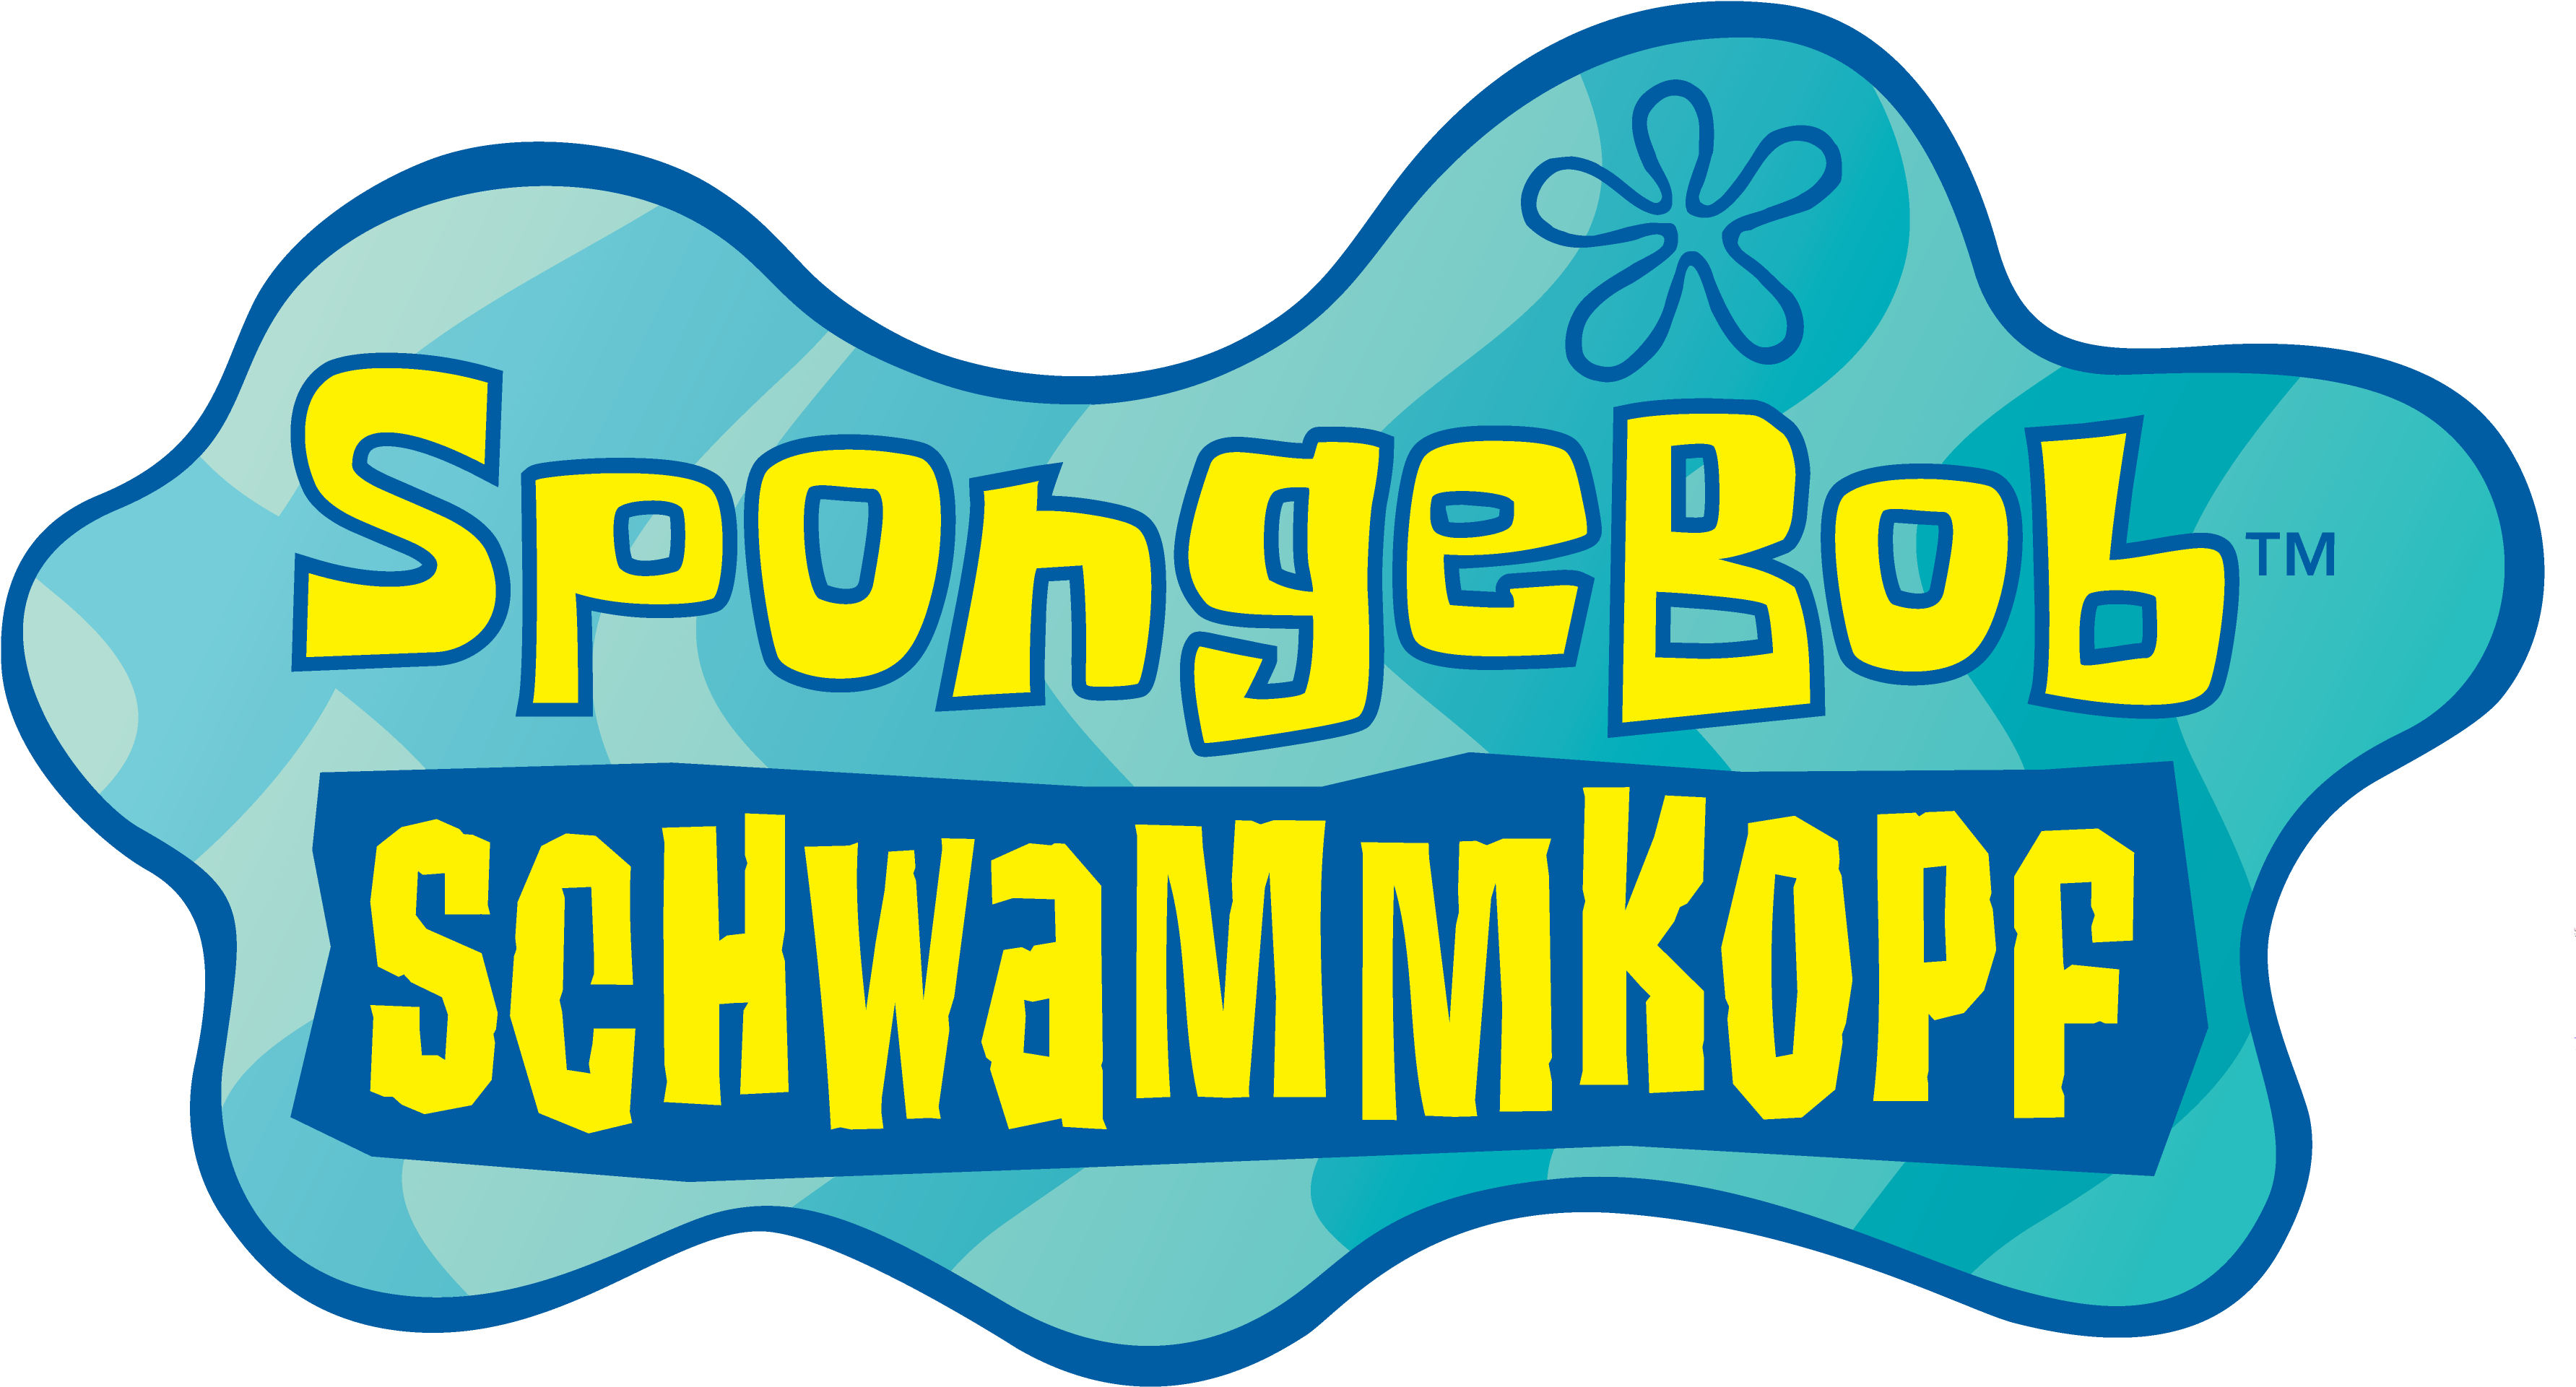 Download Schwammkopf Old Squarepants - Old Spongebob Squarepants Logo Clipart (3567x1921), Png Download